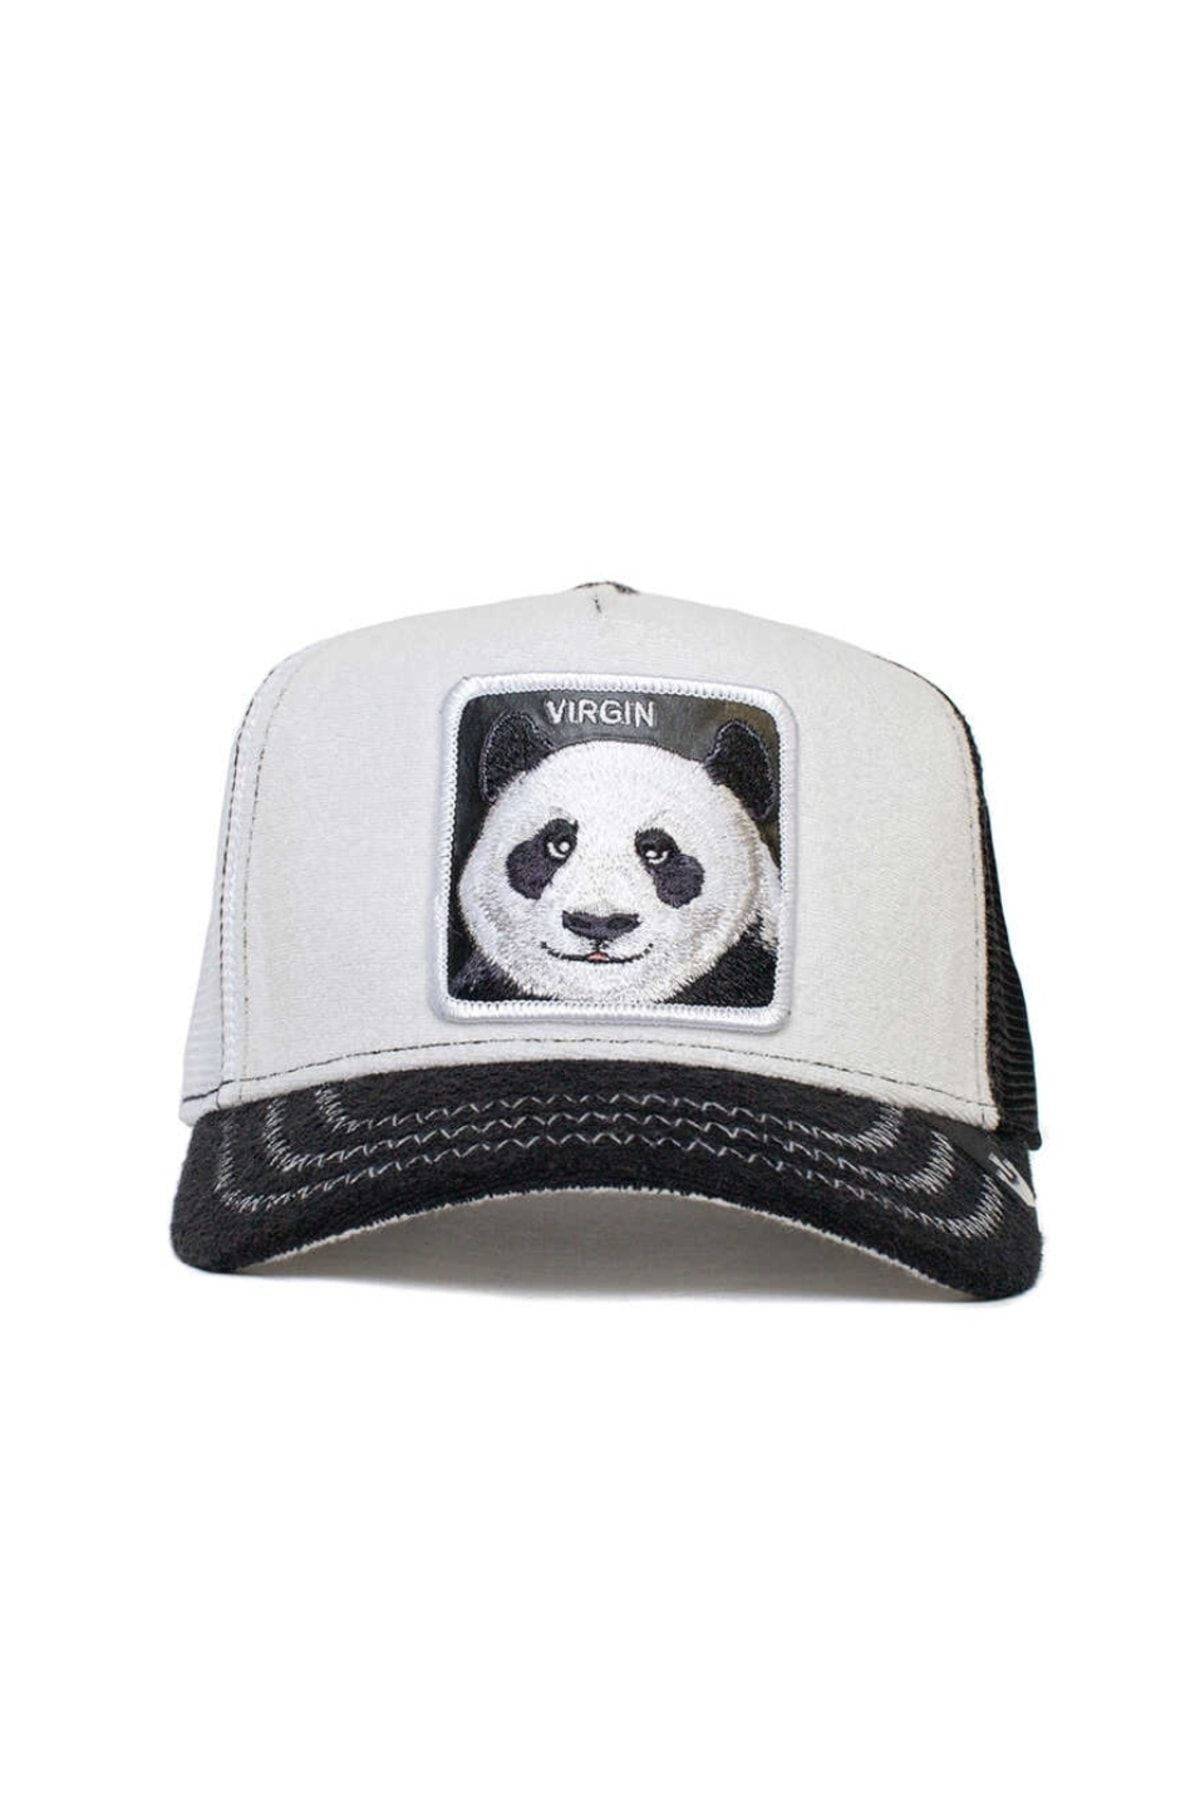 Goorin Bros Fnish Last ( Panda Figürlü) Şapka 101-0358